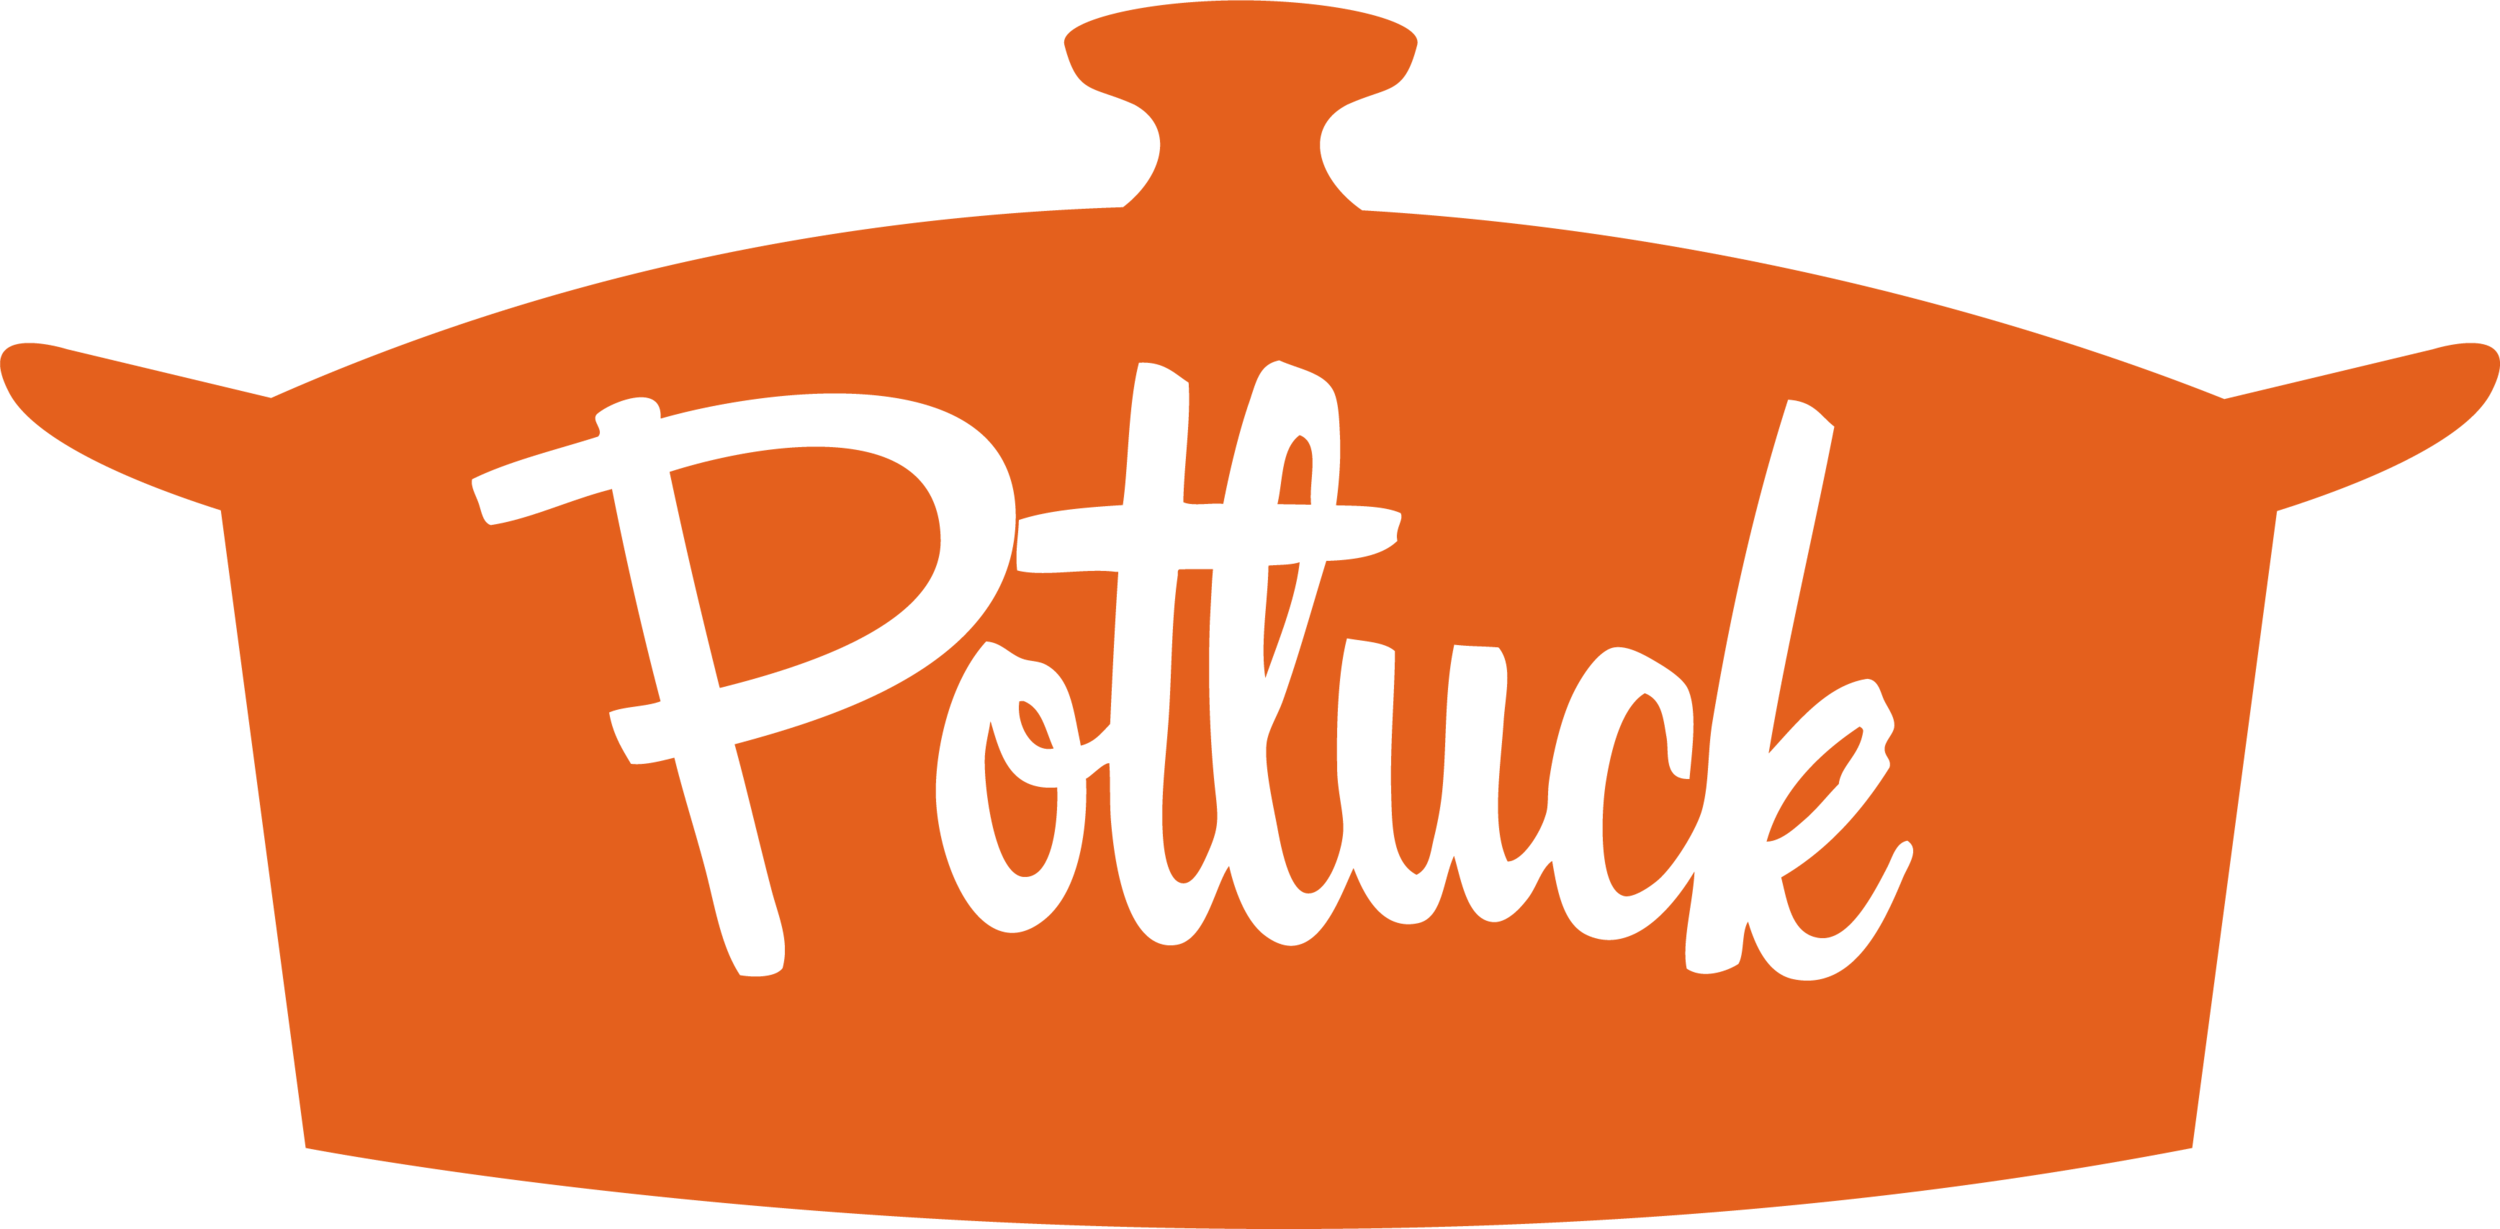 Potluck - Soup and Sandwich theme